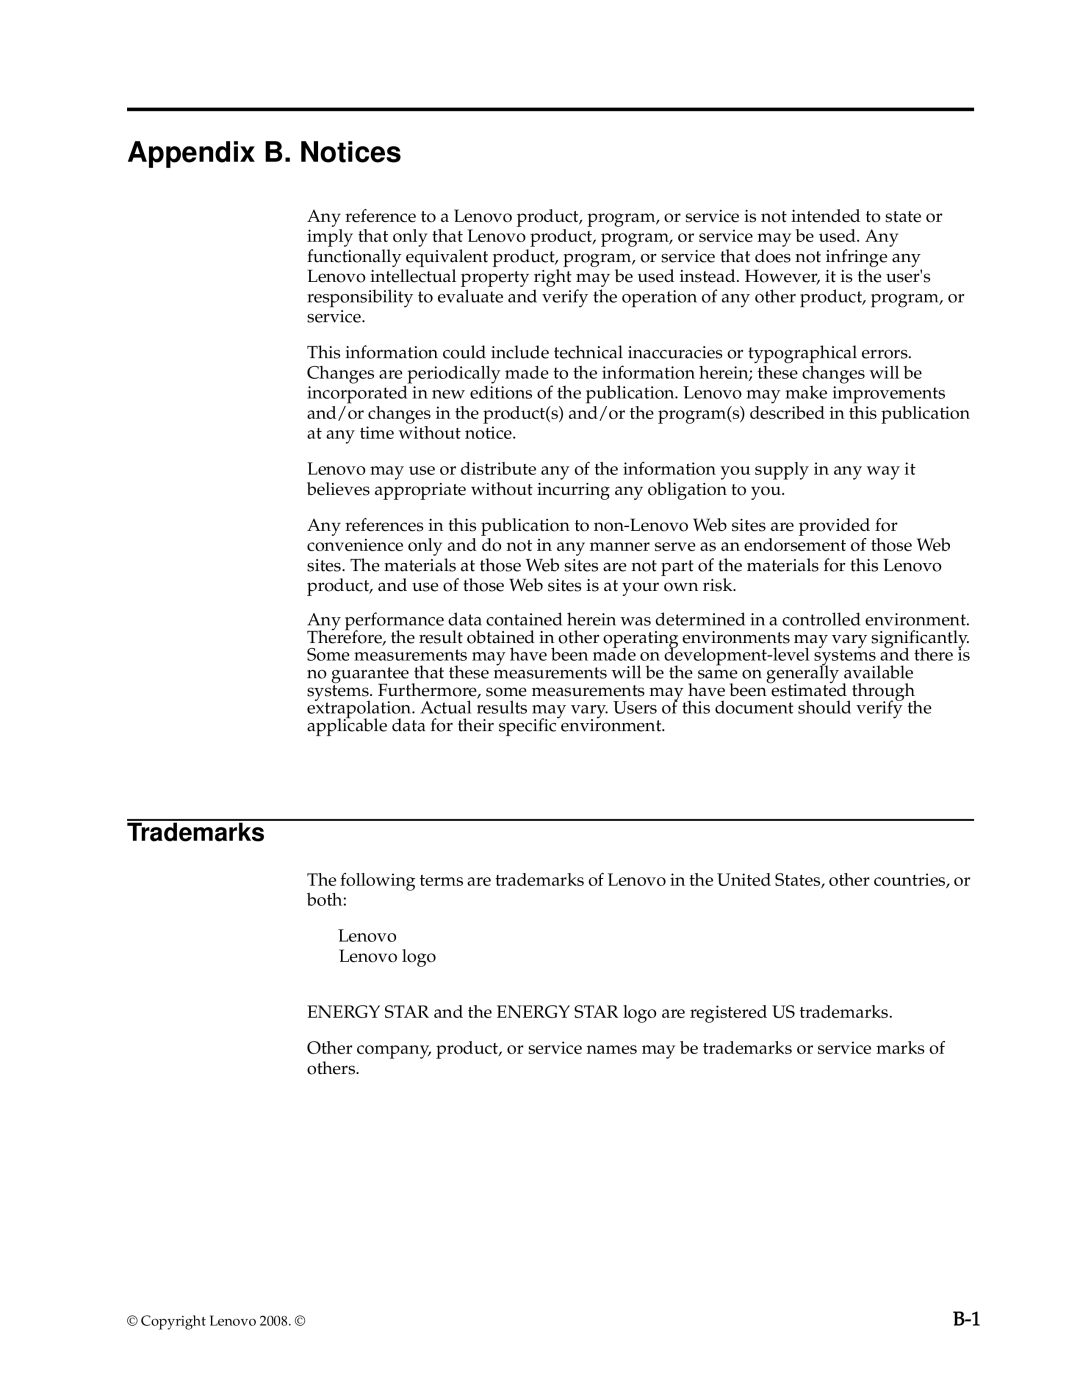 Lenovo 4432-HF1 manual Appendix B. Notices, Trademarks 